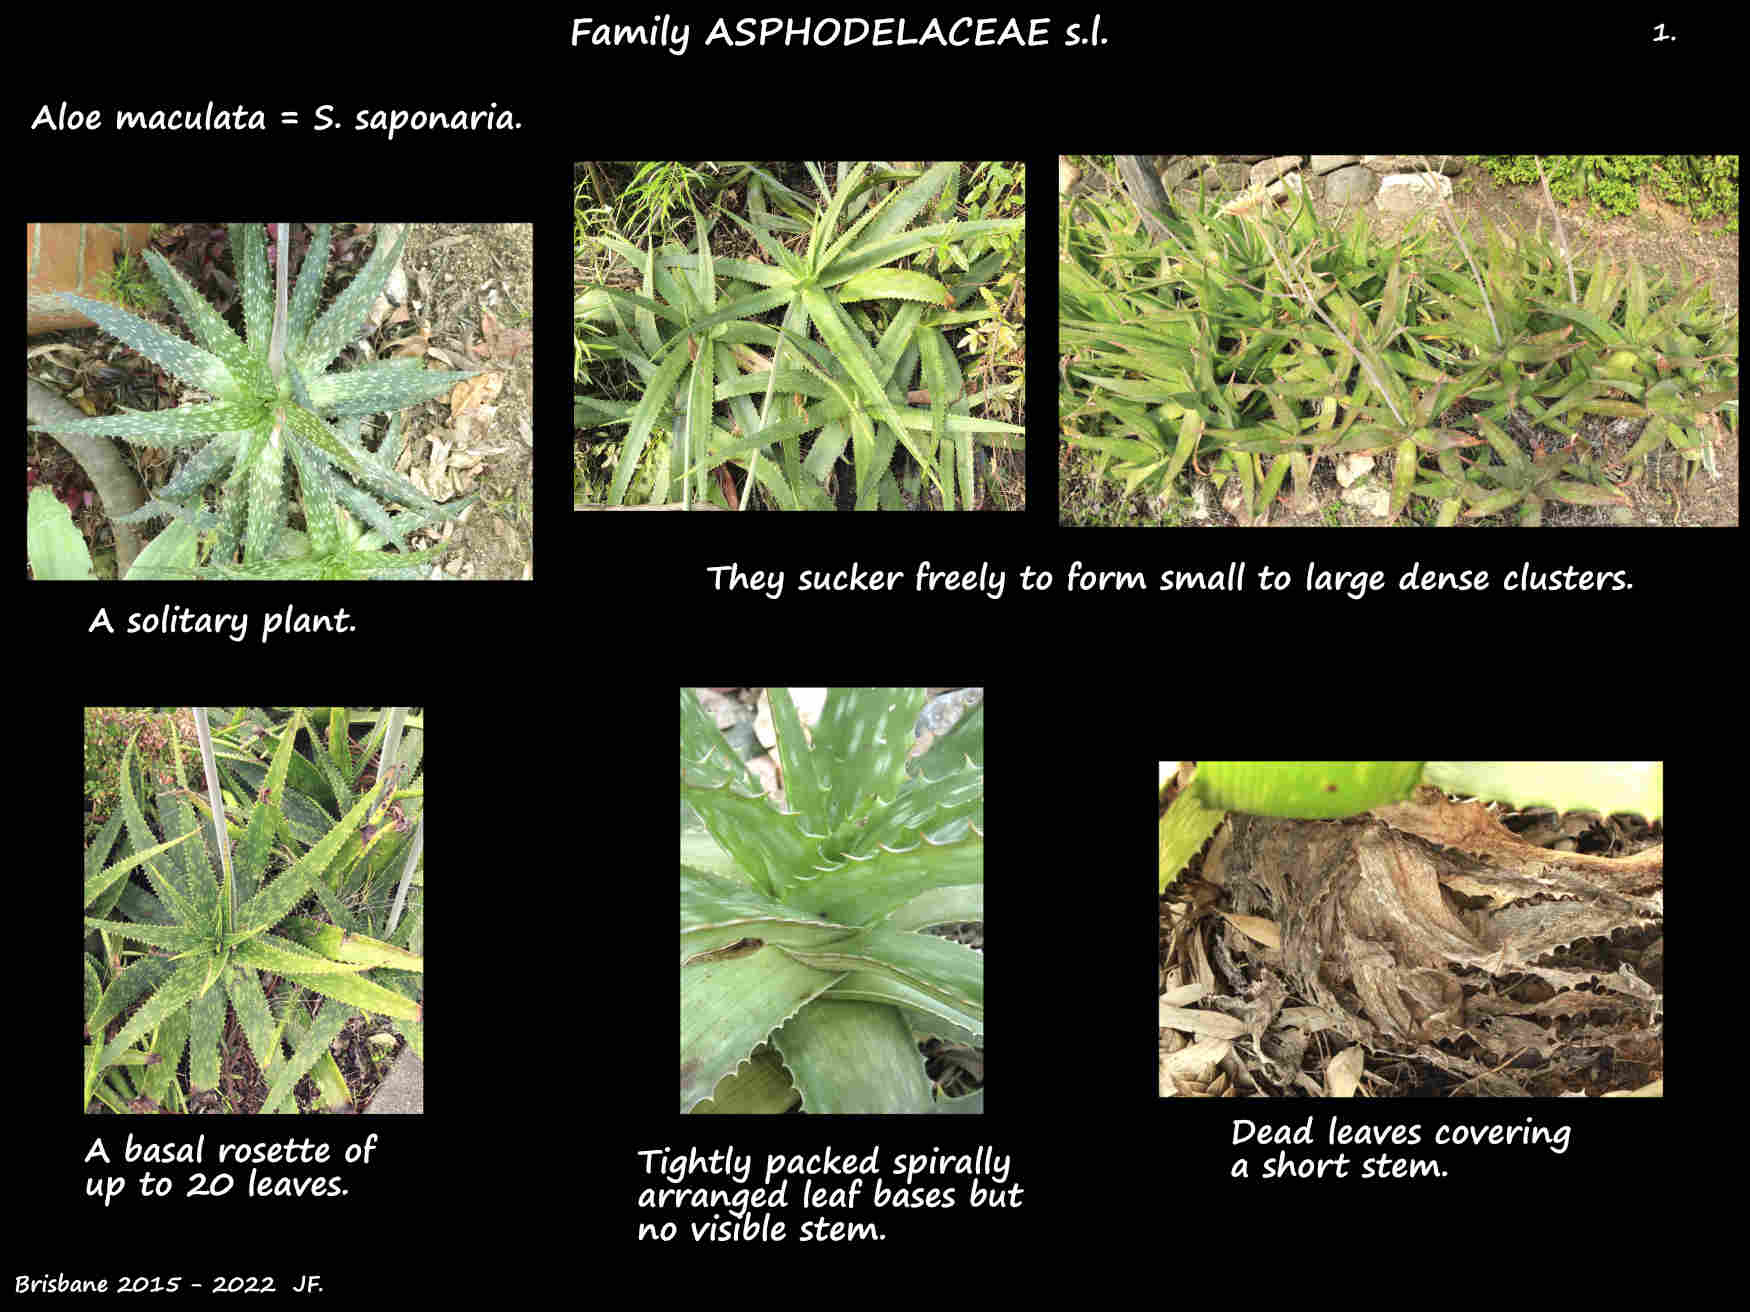 1 Aloe maculata plants